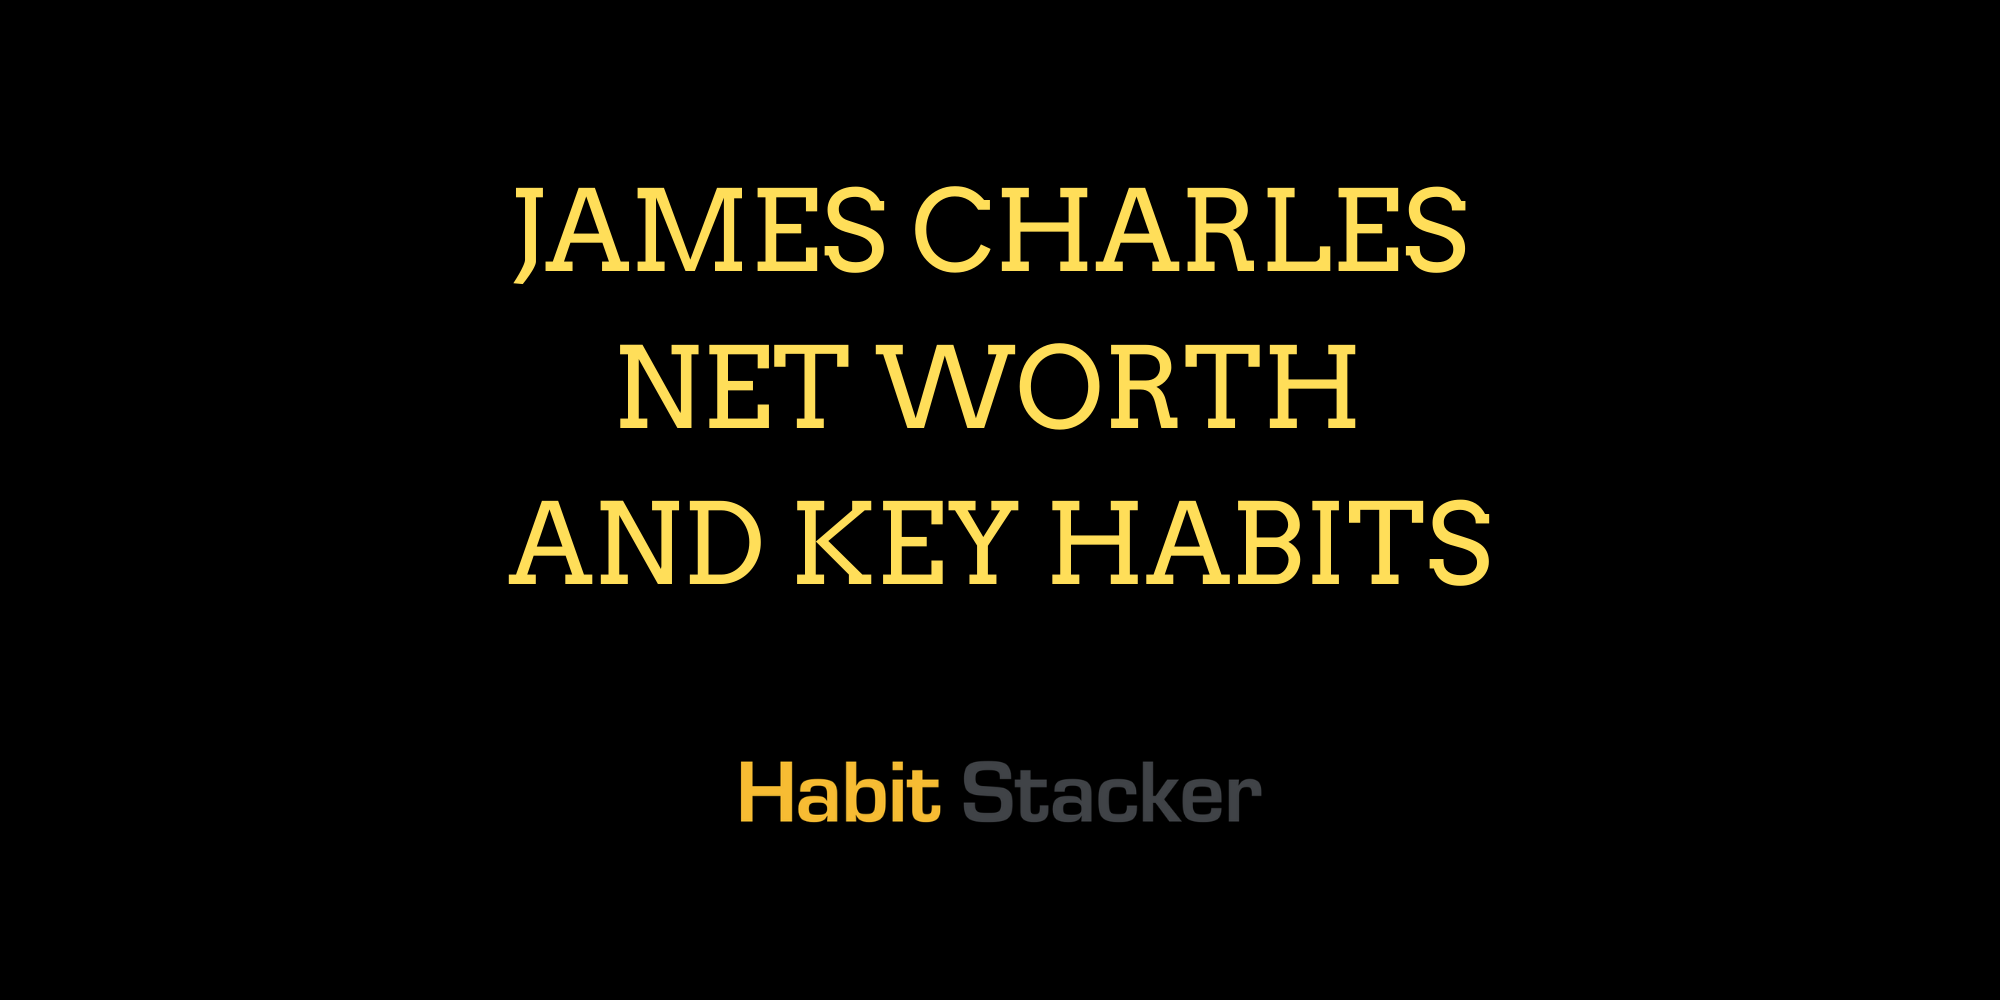 James Charles Net Worth and Key Habits